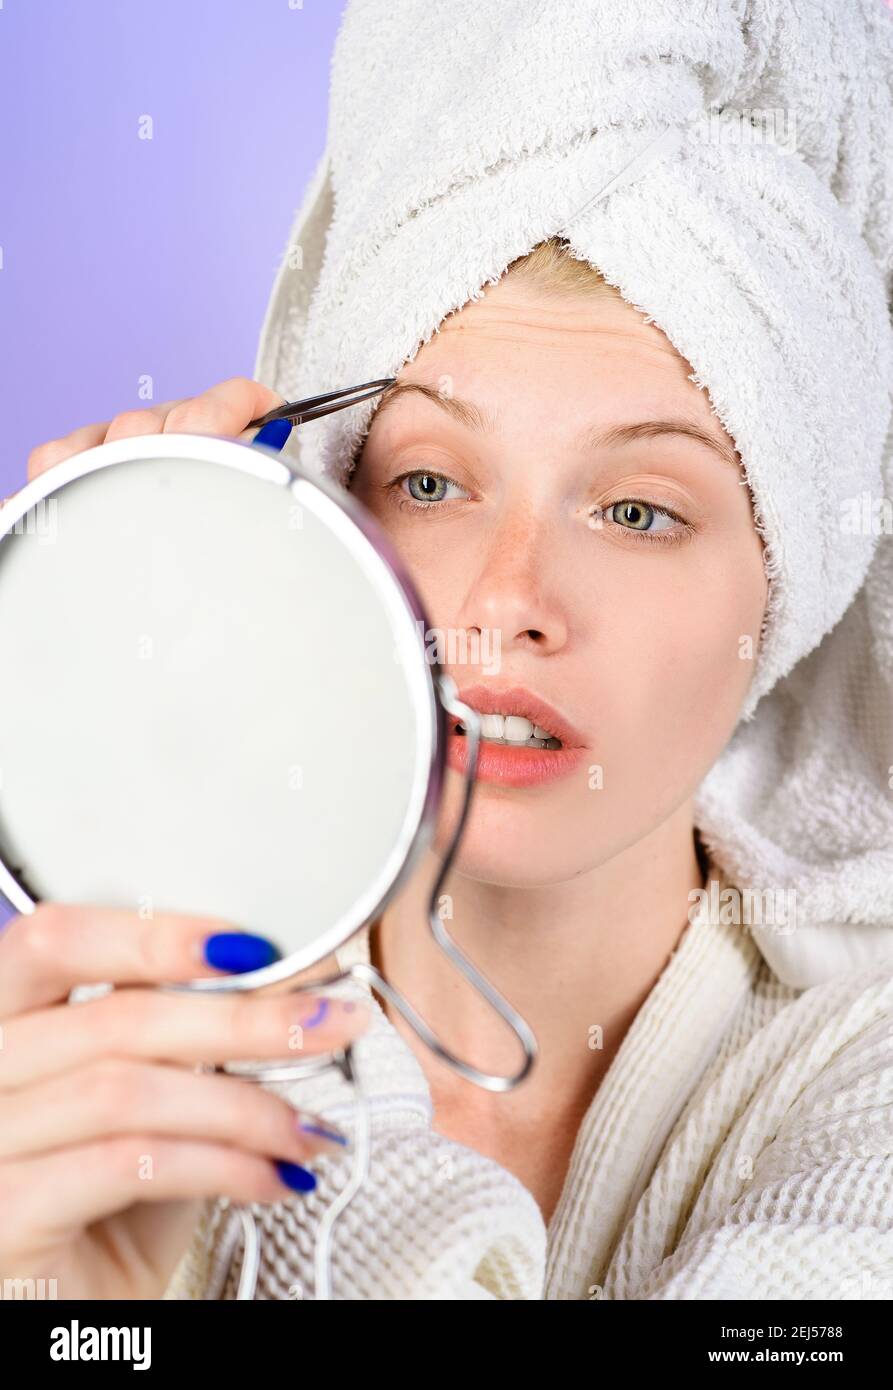 Epilate eyebrows. Girl pluck eye brow looking in mirror. Woman with tweezers. Beauty care. Correction procedure in beauty salon. Stock Photo